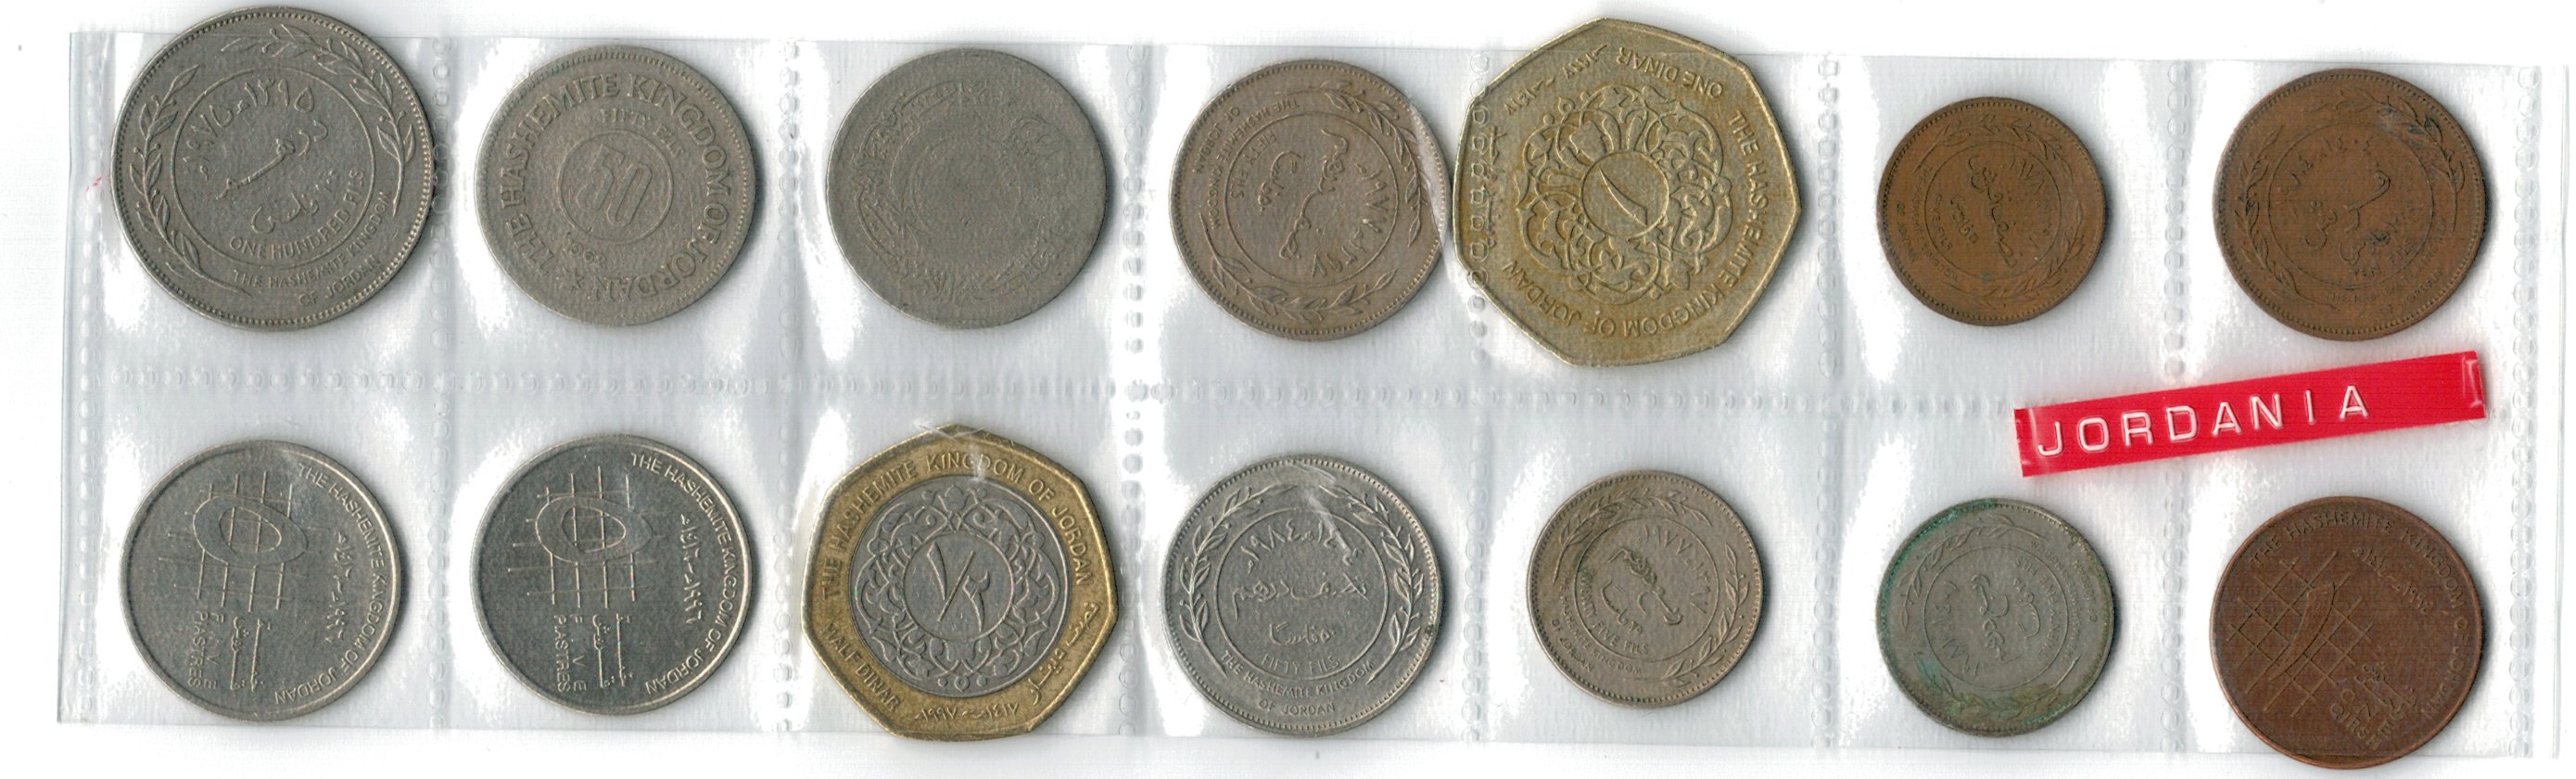 Iordania - Lot 14 monede circulate